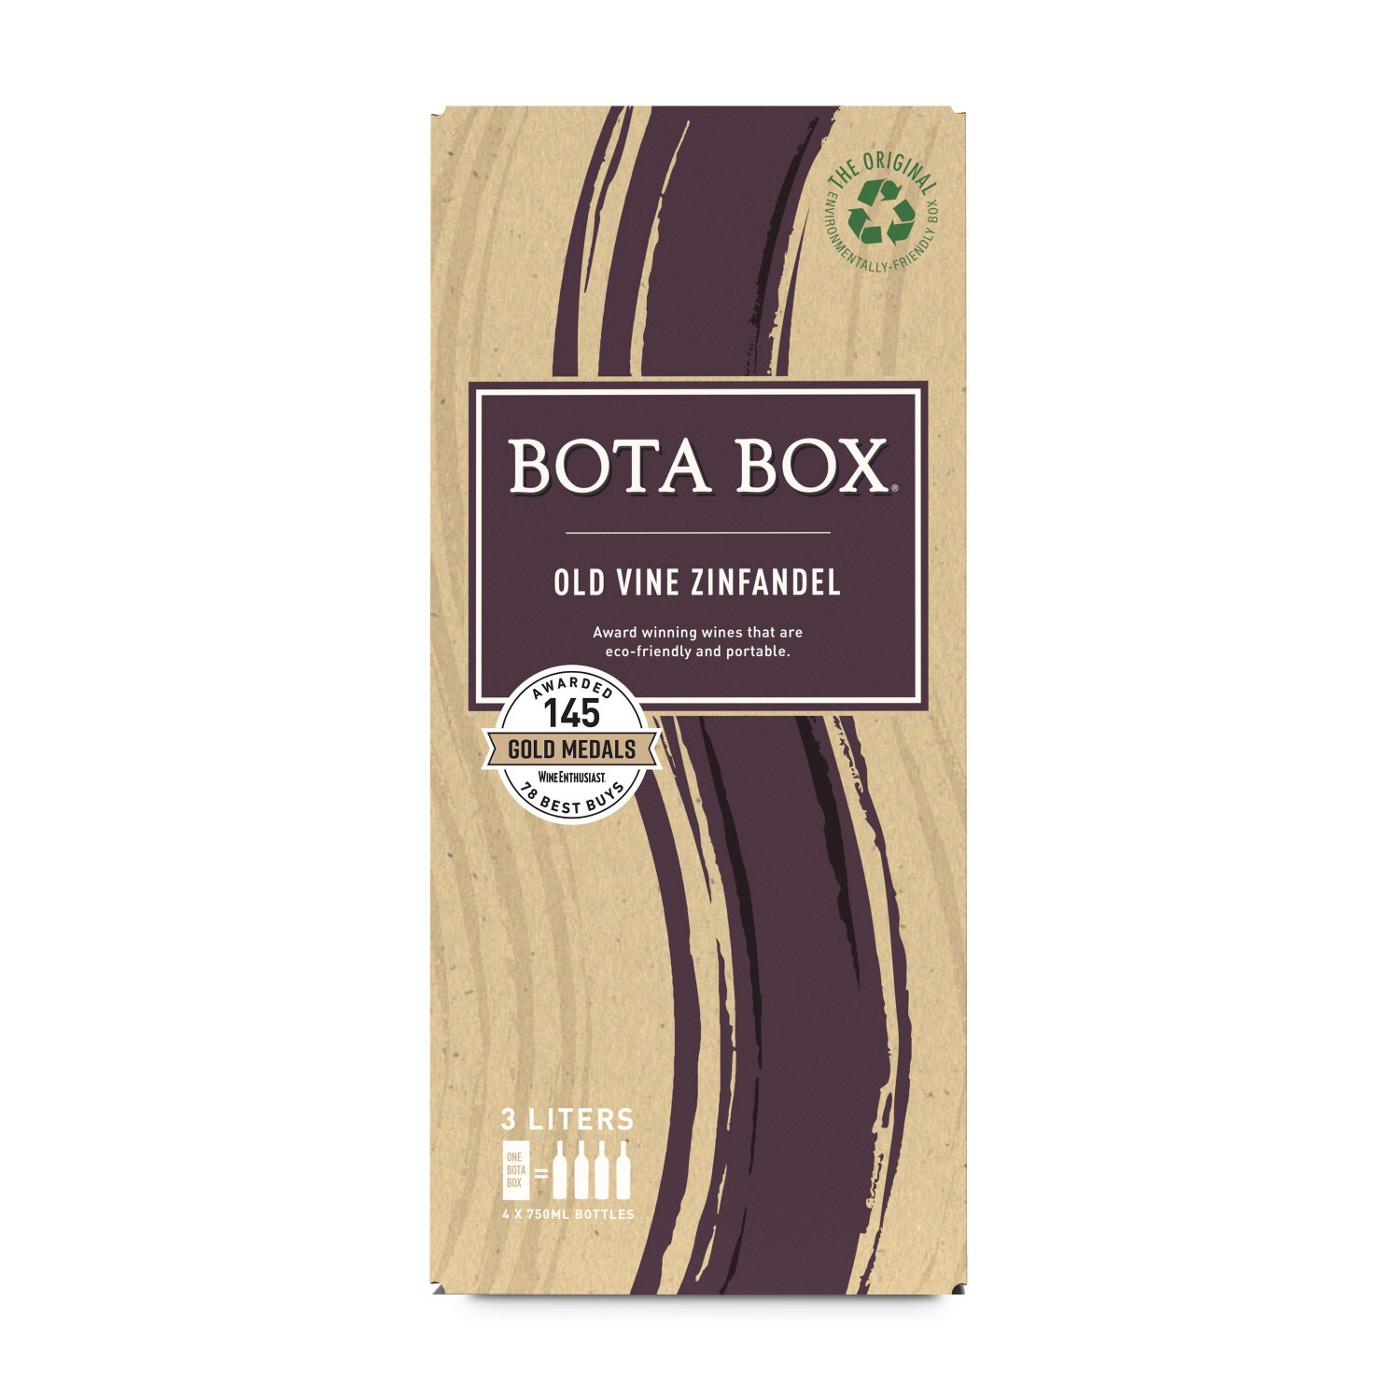 Bota Box Zinfandel; image 1 of 4